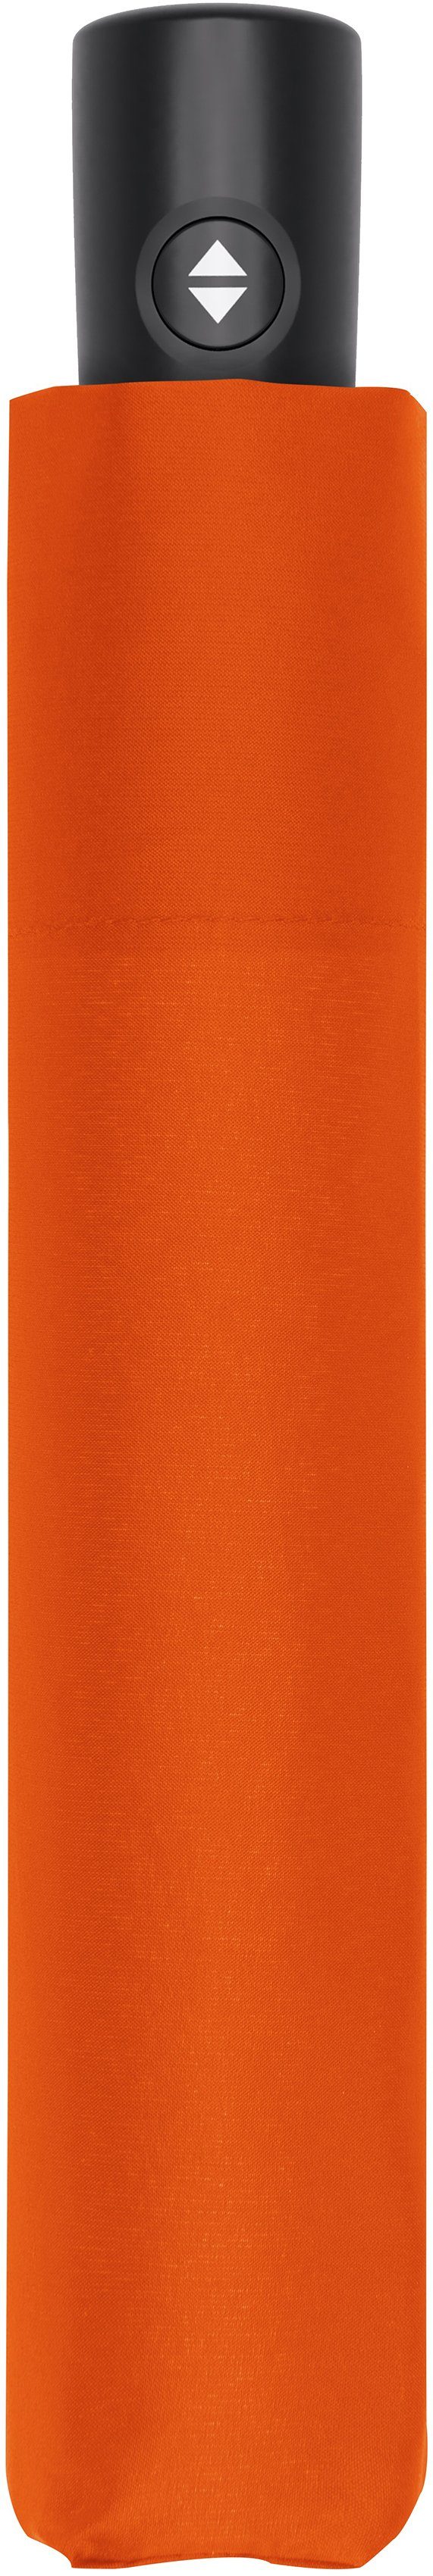 Magic Vibrant Zero doppler® Orange uni, Taschenregenschirm